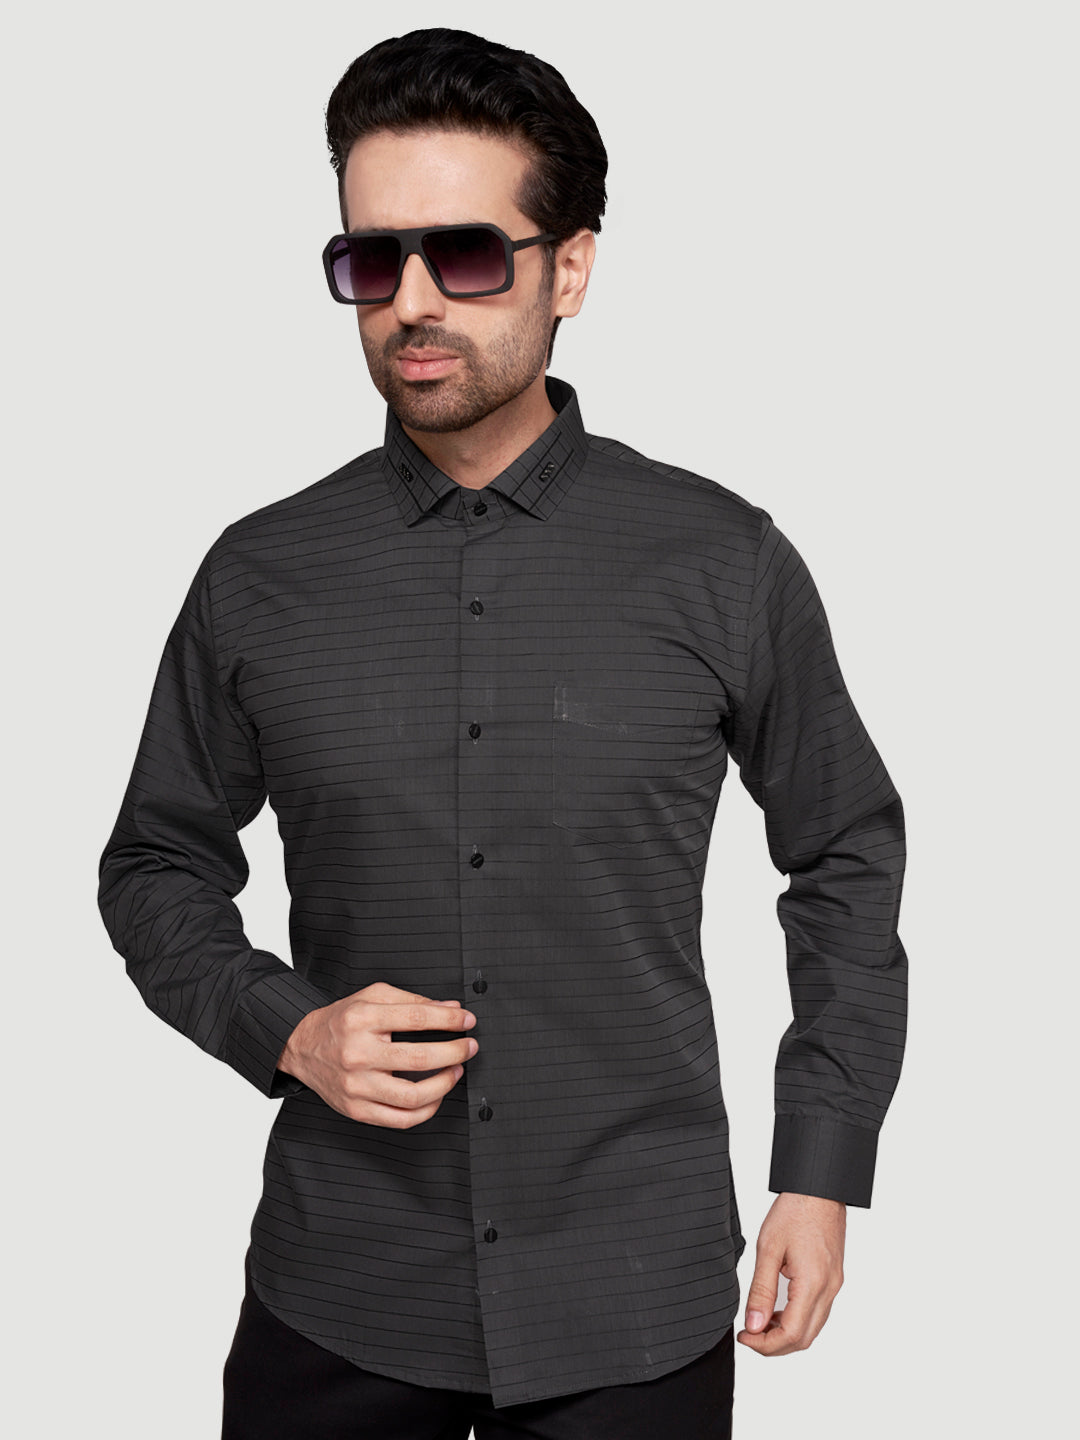 Black & White Men's Designer Weft Shirt with Collar Accessory Grey